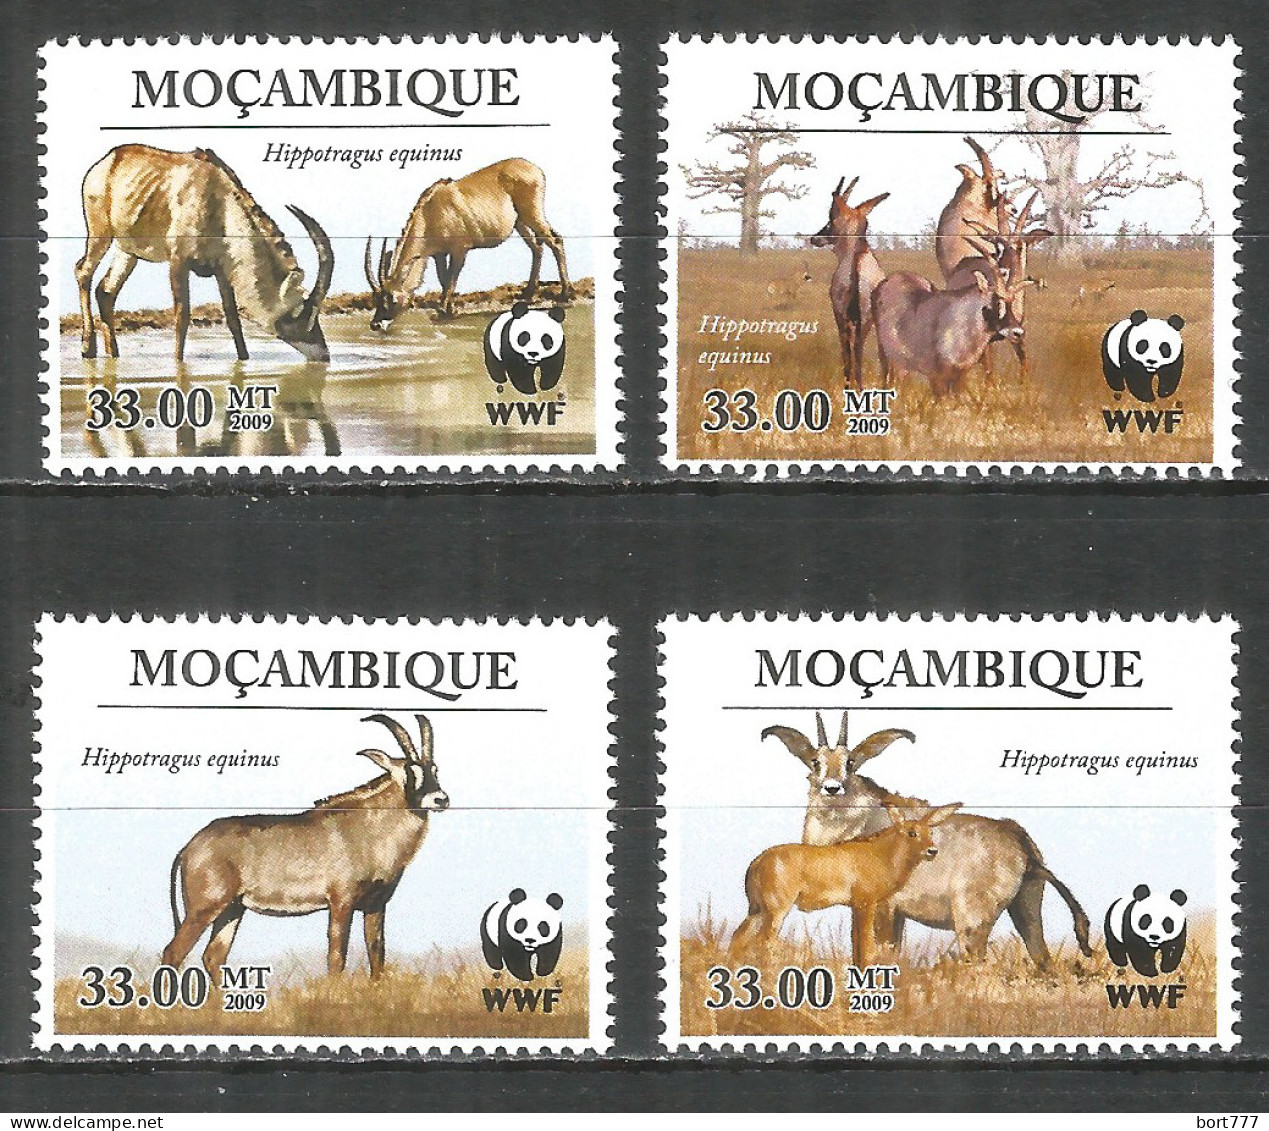 Mozambique 2009 Mint Stamps MNH(**) WWF – Antelopes - Mozambique